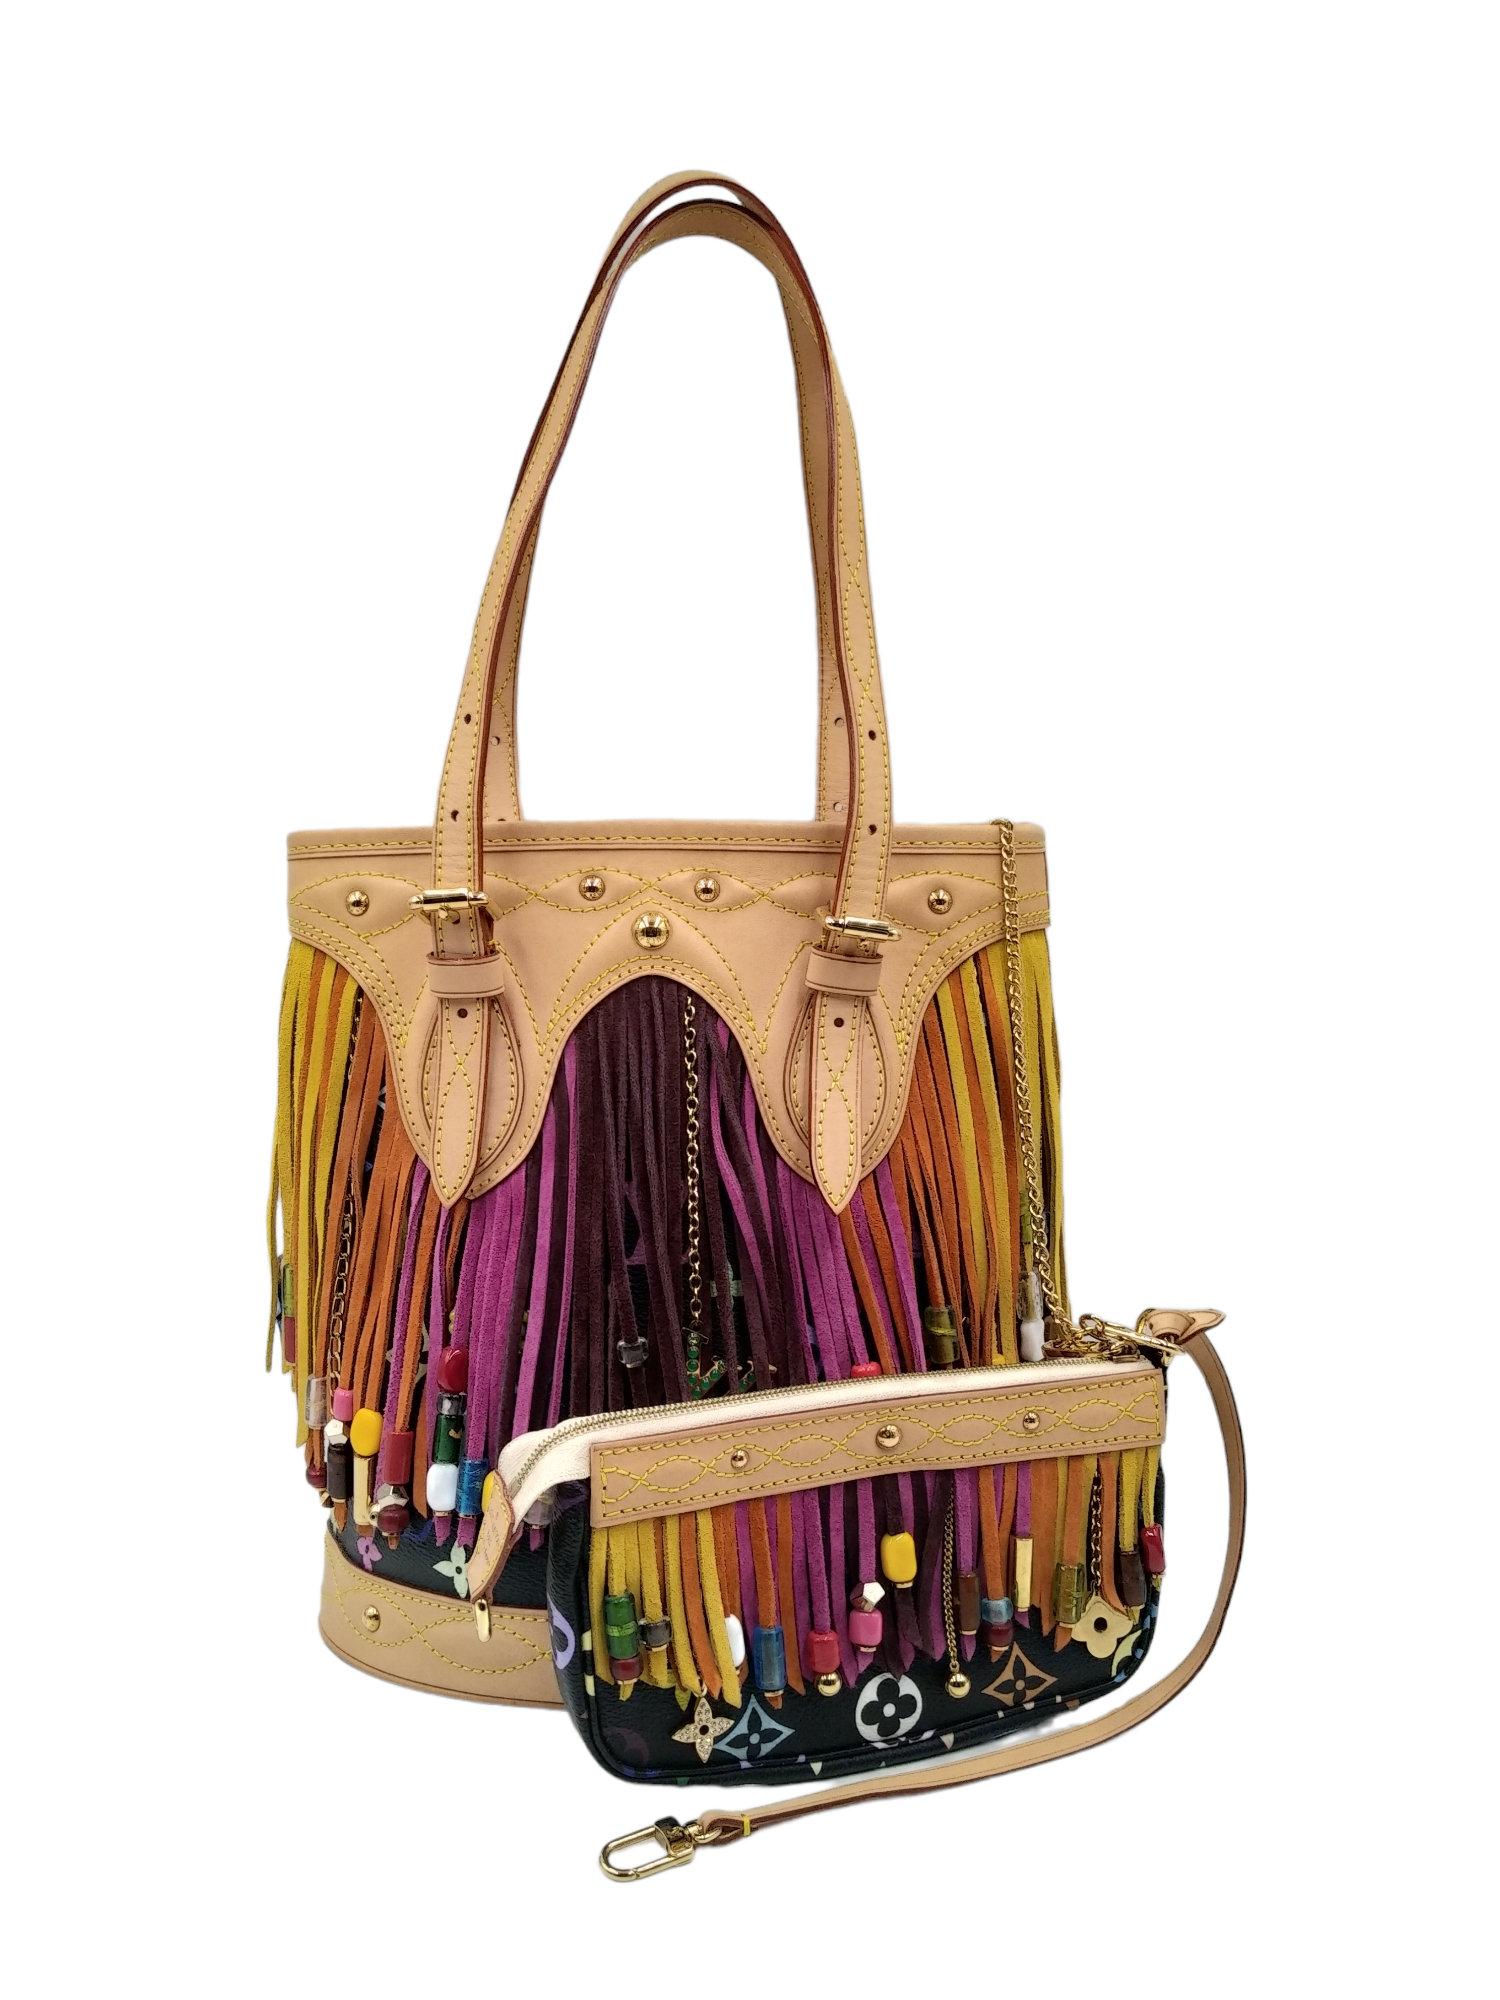 lv western purse with fringe